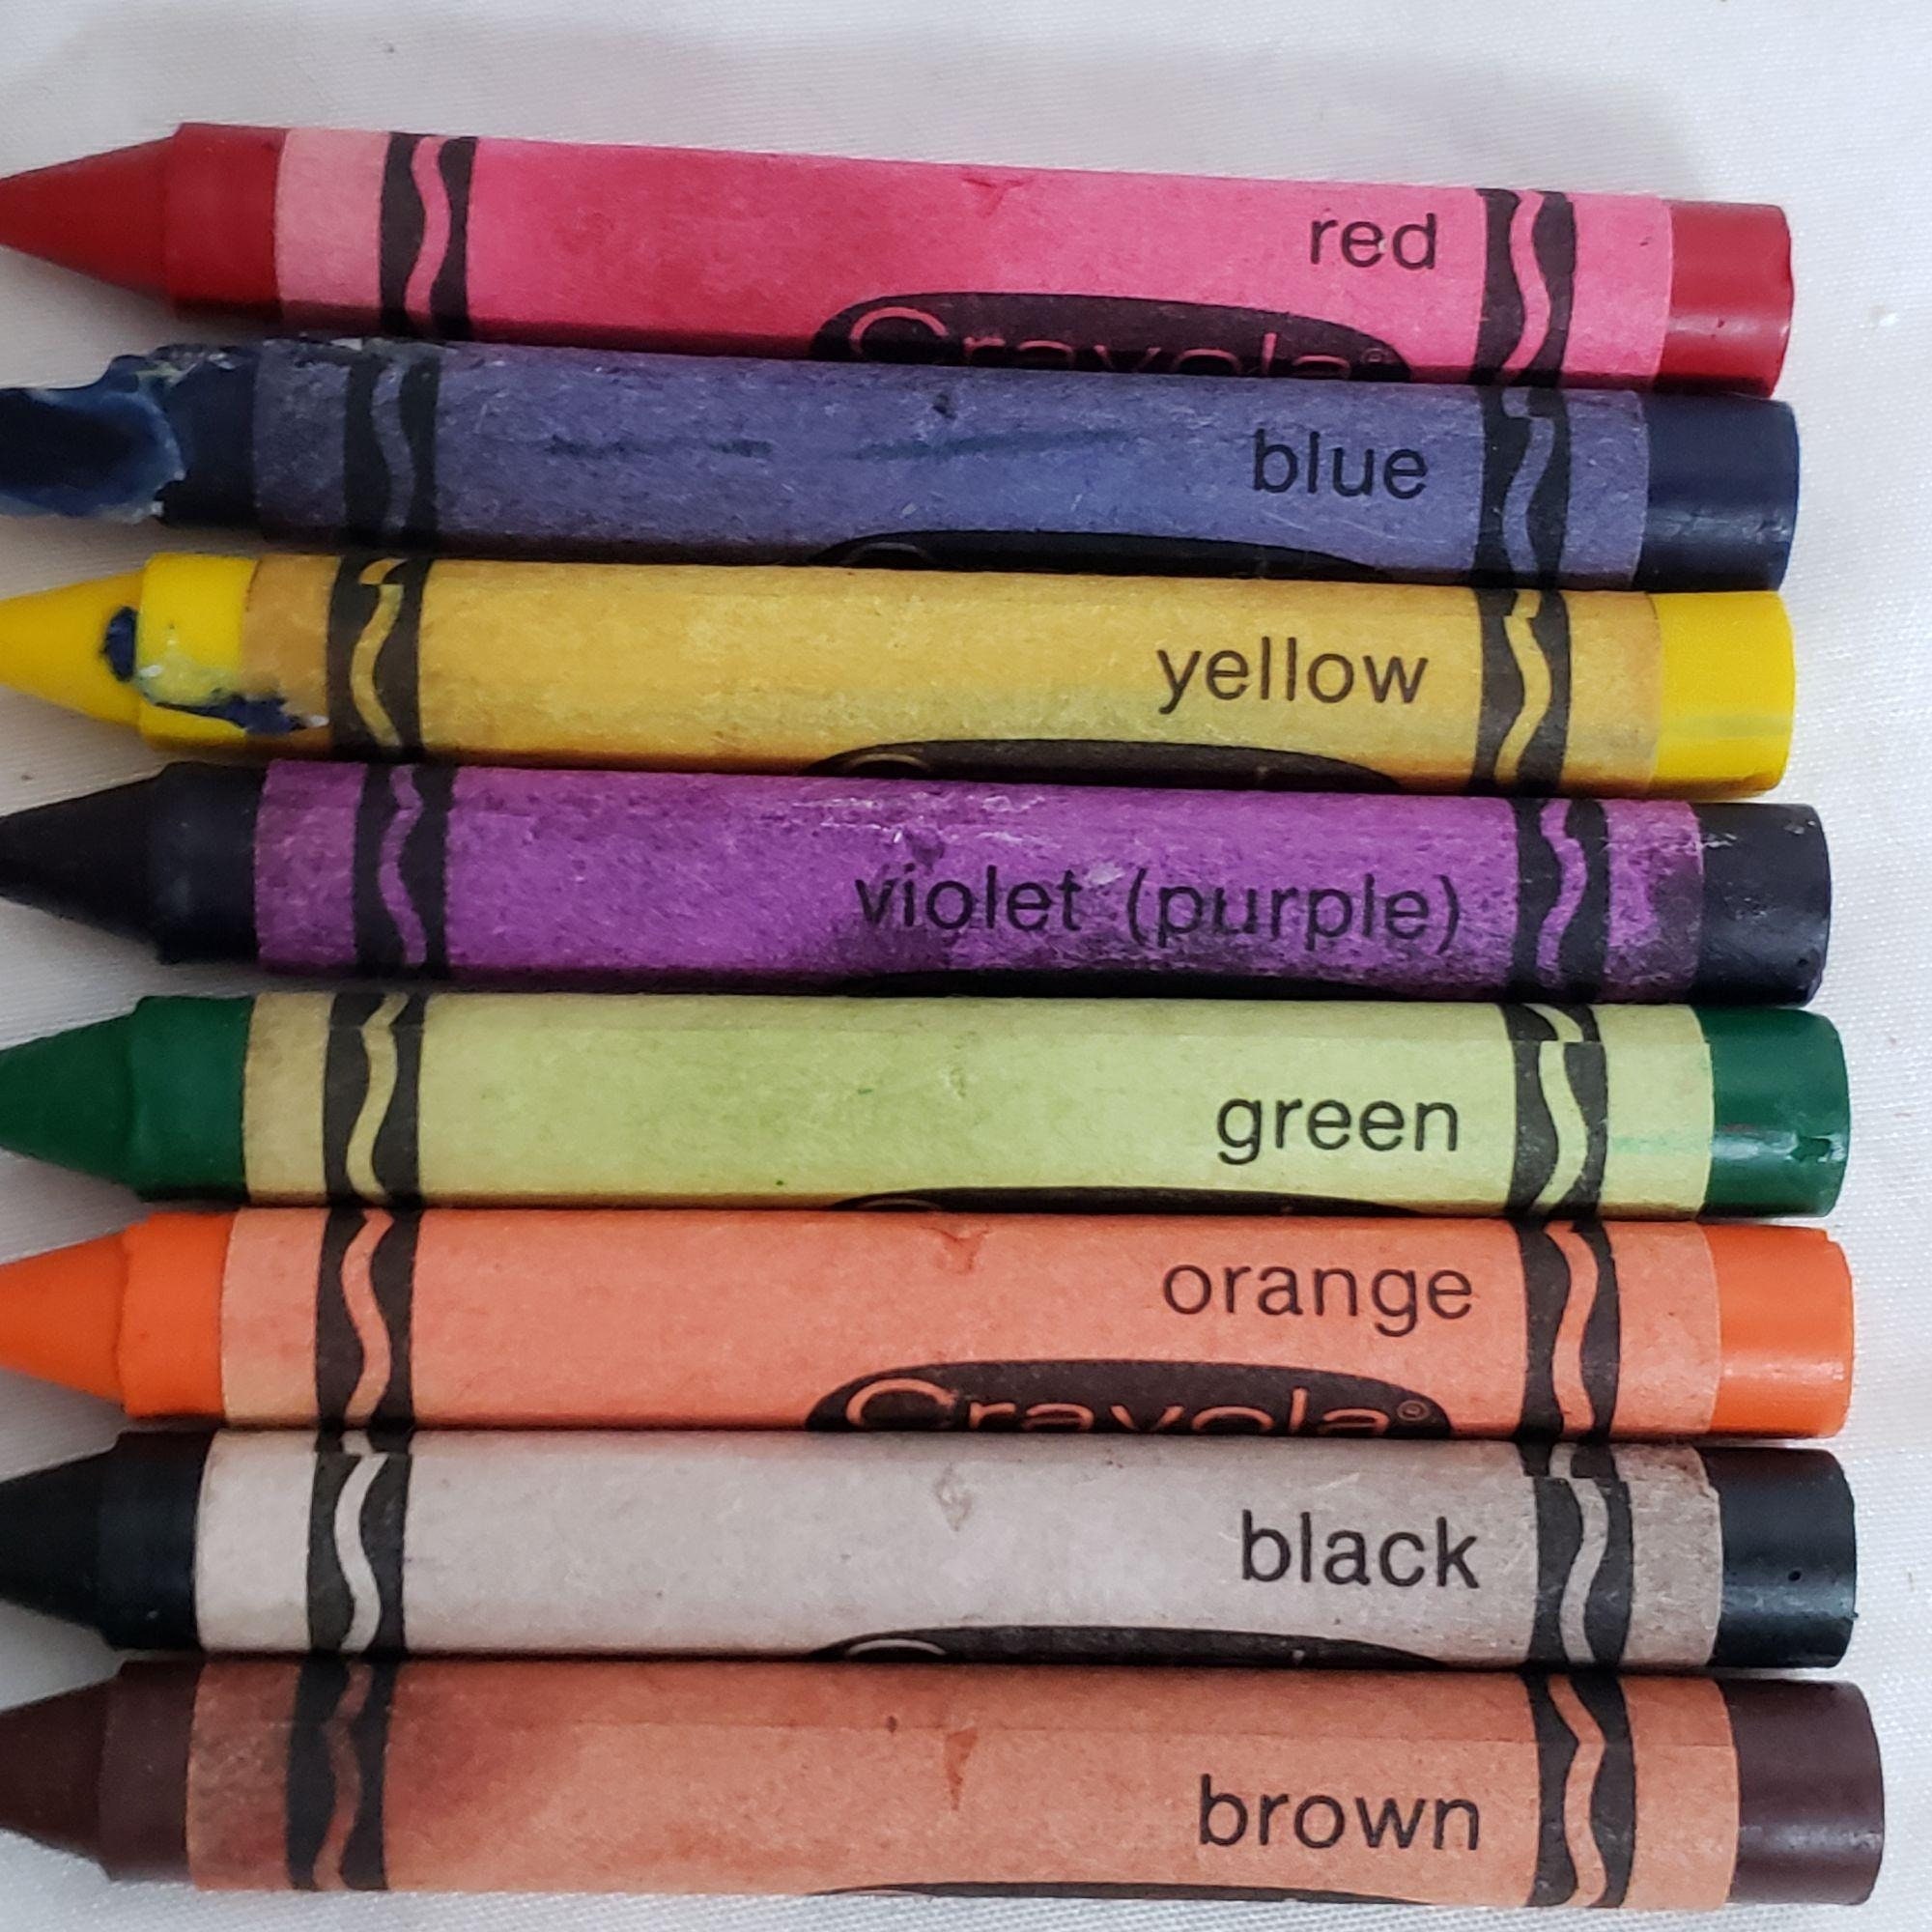 Knowledge Tree  Crayola Binney + Smith Bulk Crayons, Regular Size